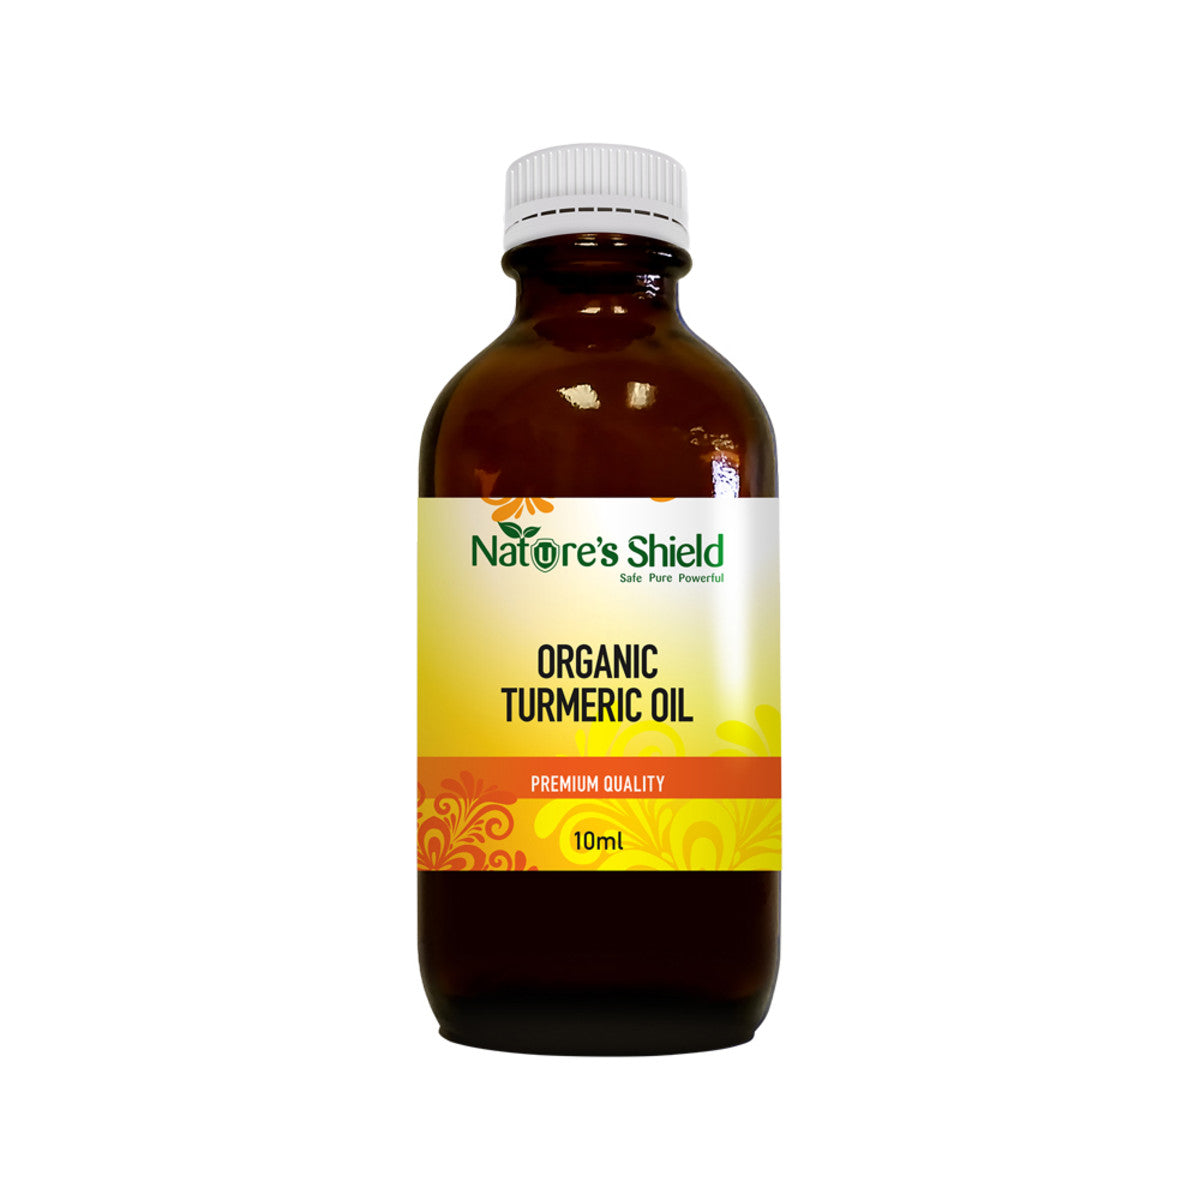 Nature's Shield - Organic Edible Turmeric Oil 10ml